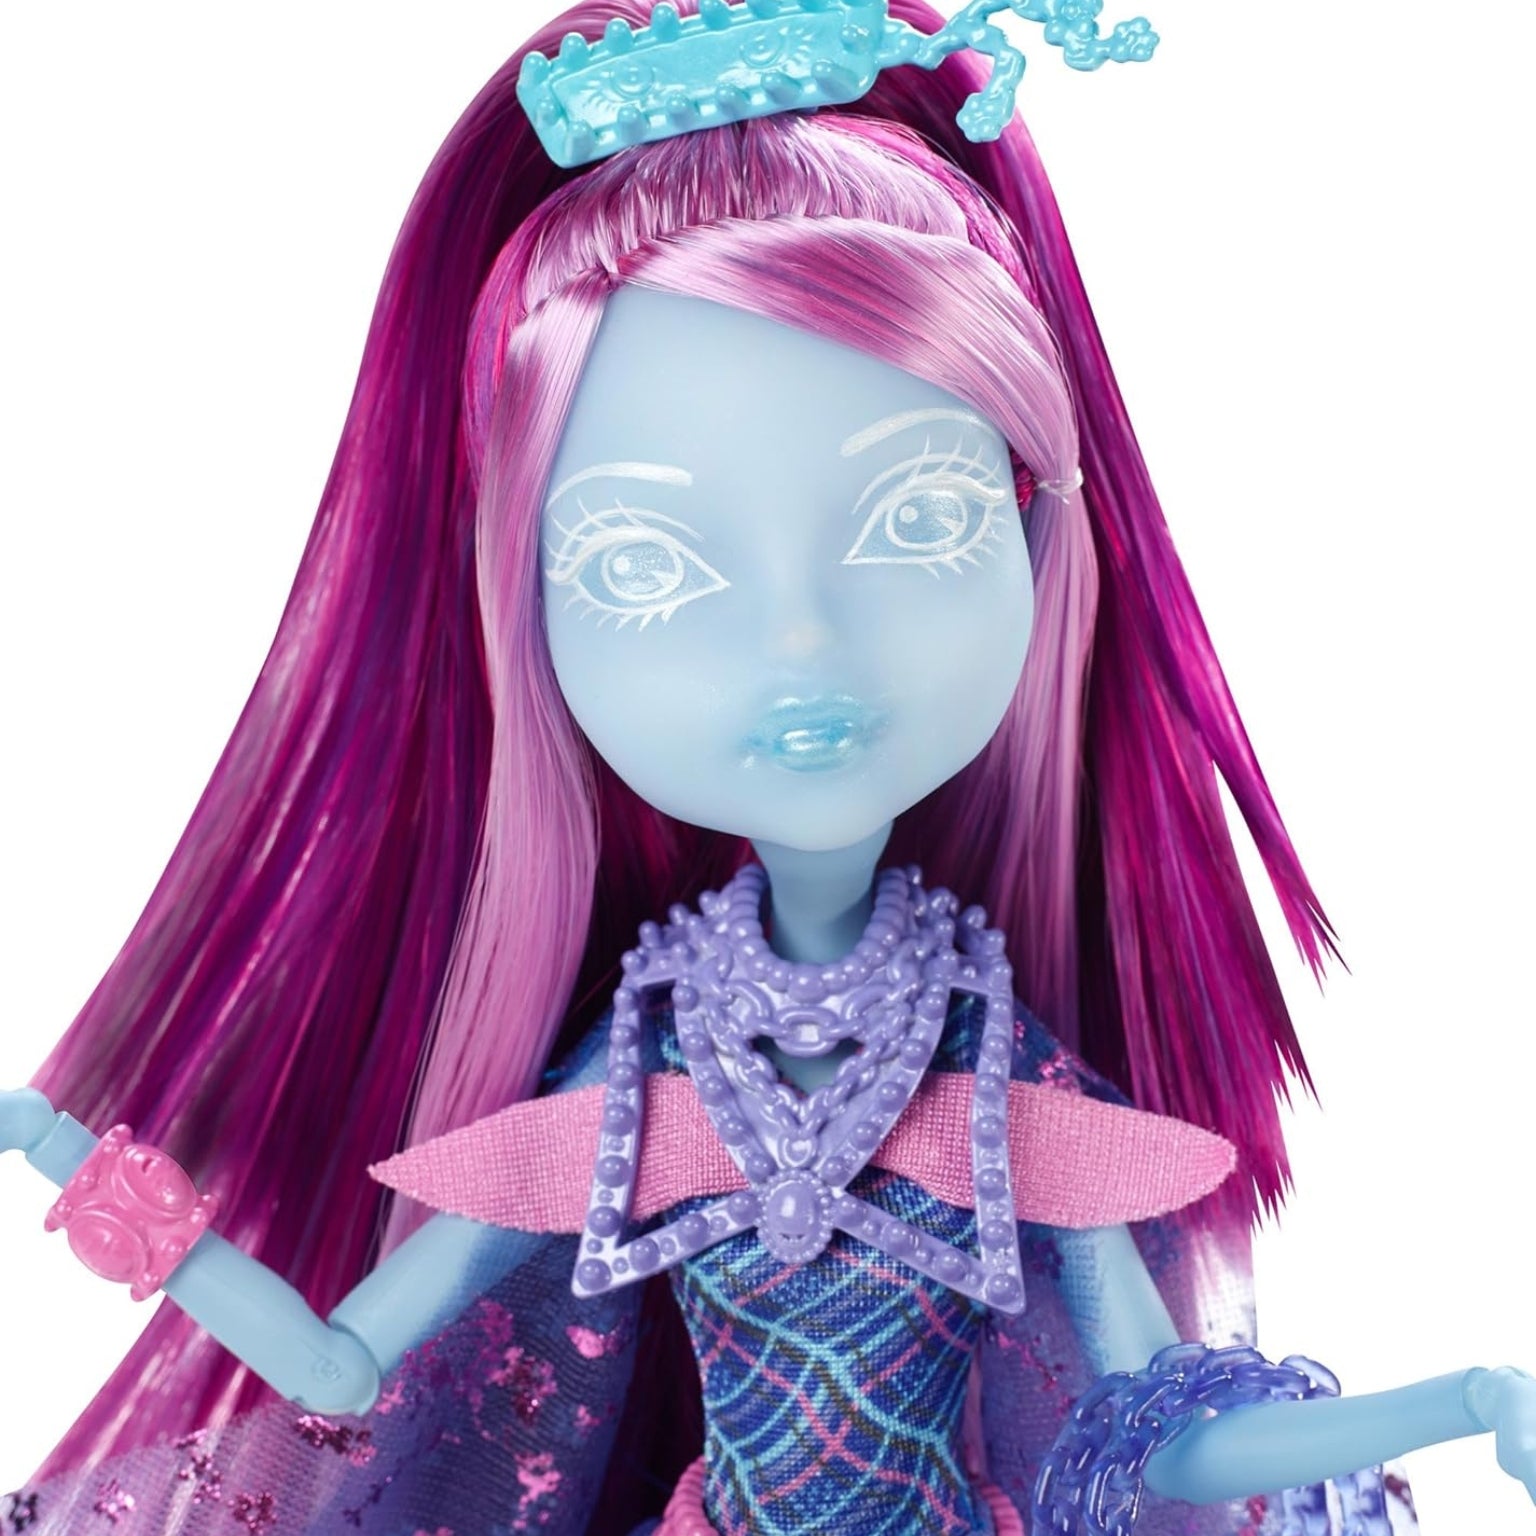 Monster High Fantasmagóricas Kiyomi Haunterly